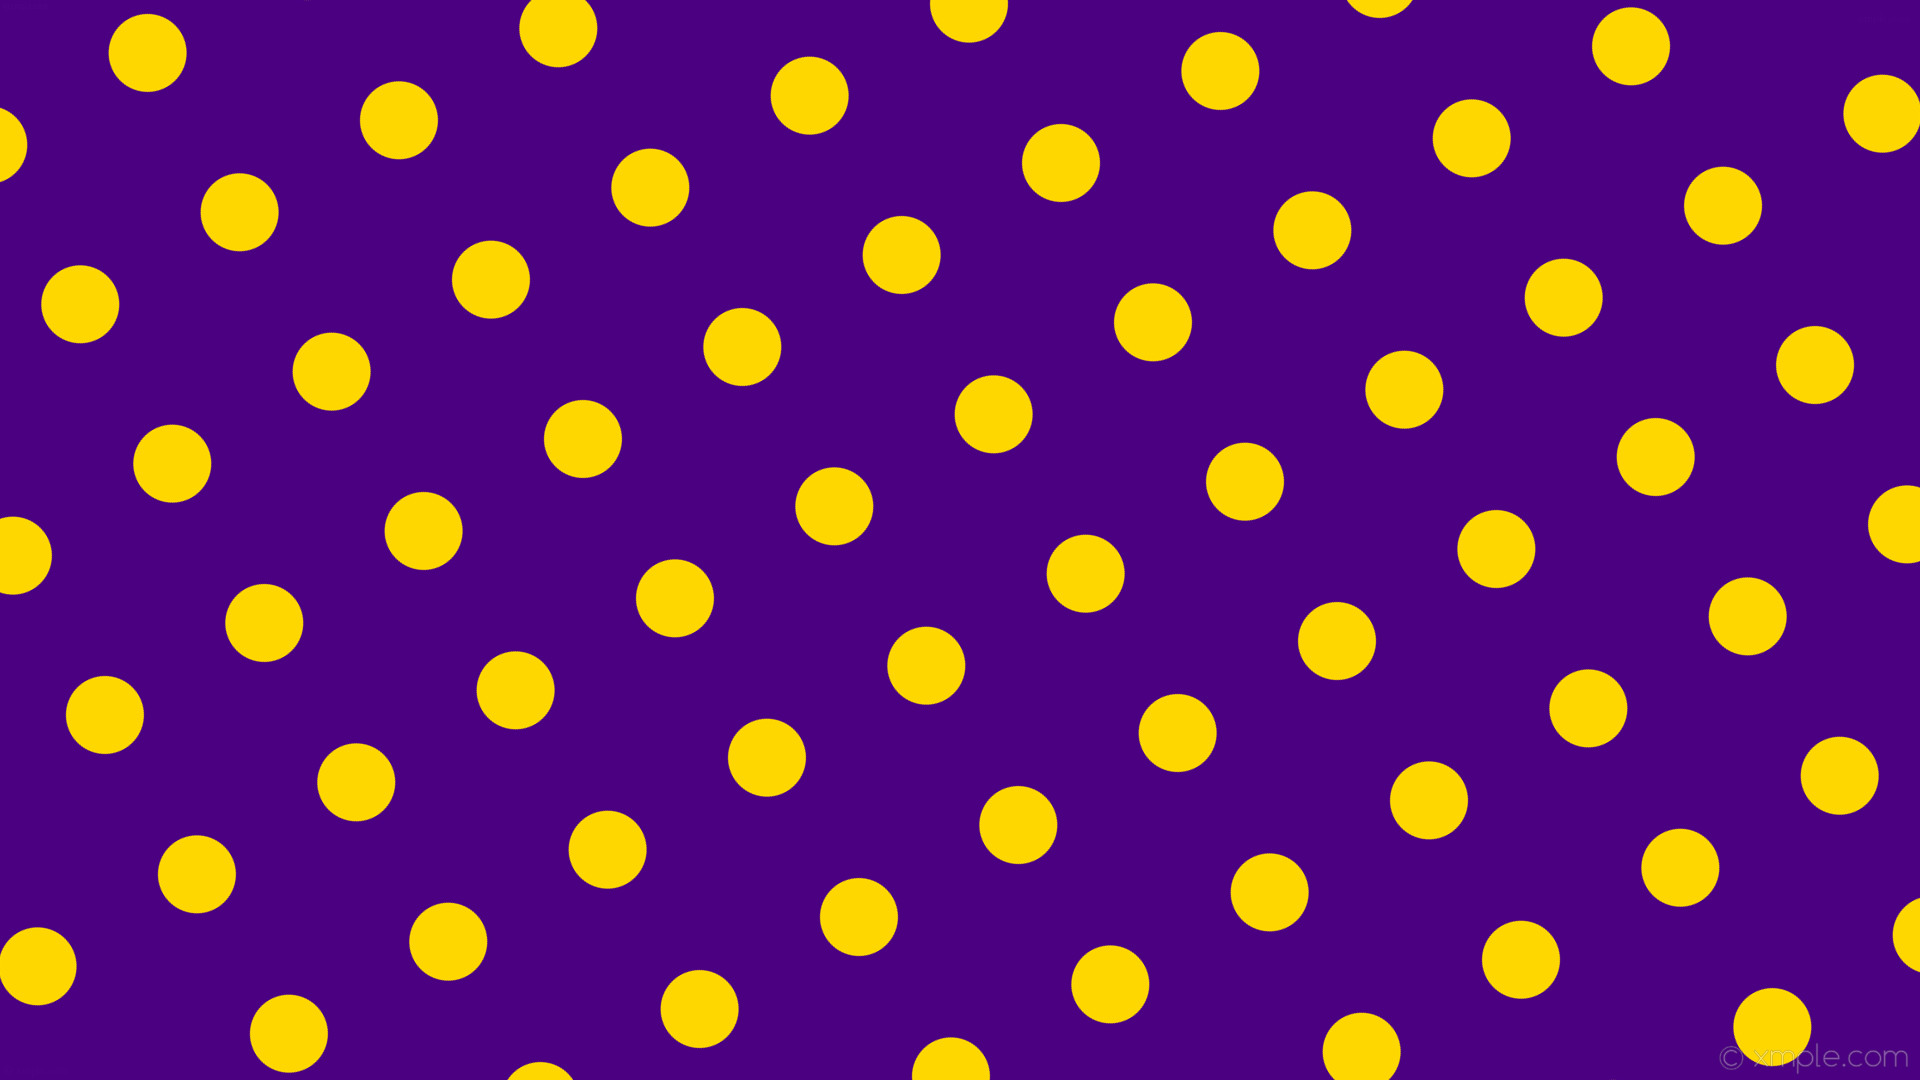 1920x1080 wallpaper purple yellow dots spots polka indigo gold #4b0082 #ffd700 120Â°  78px 184px